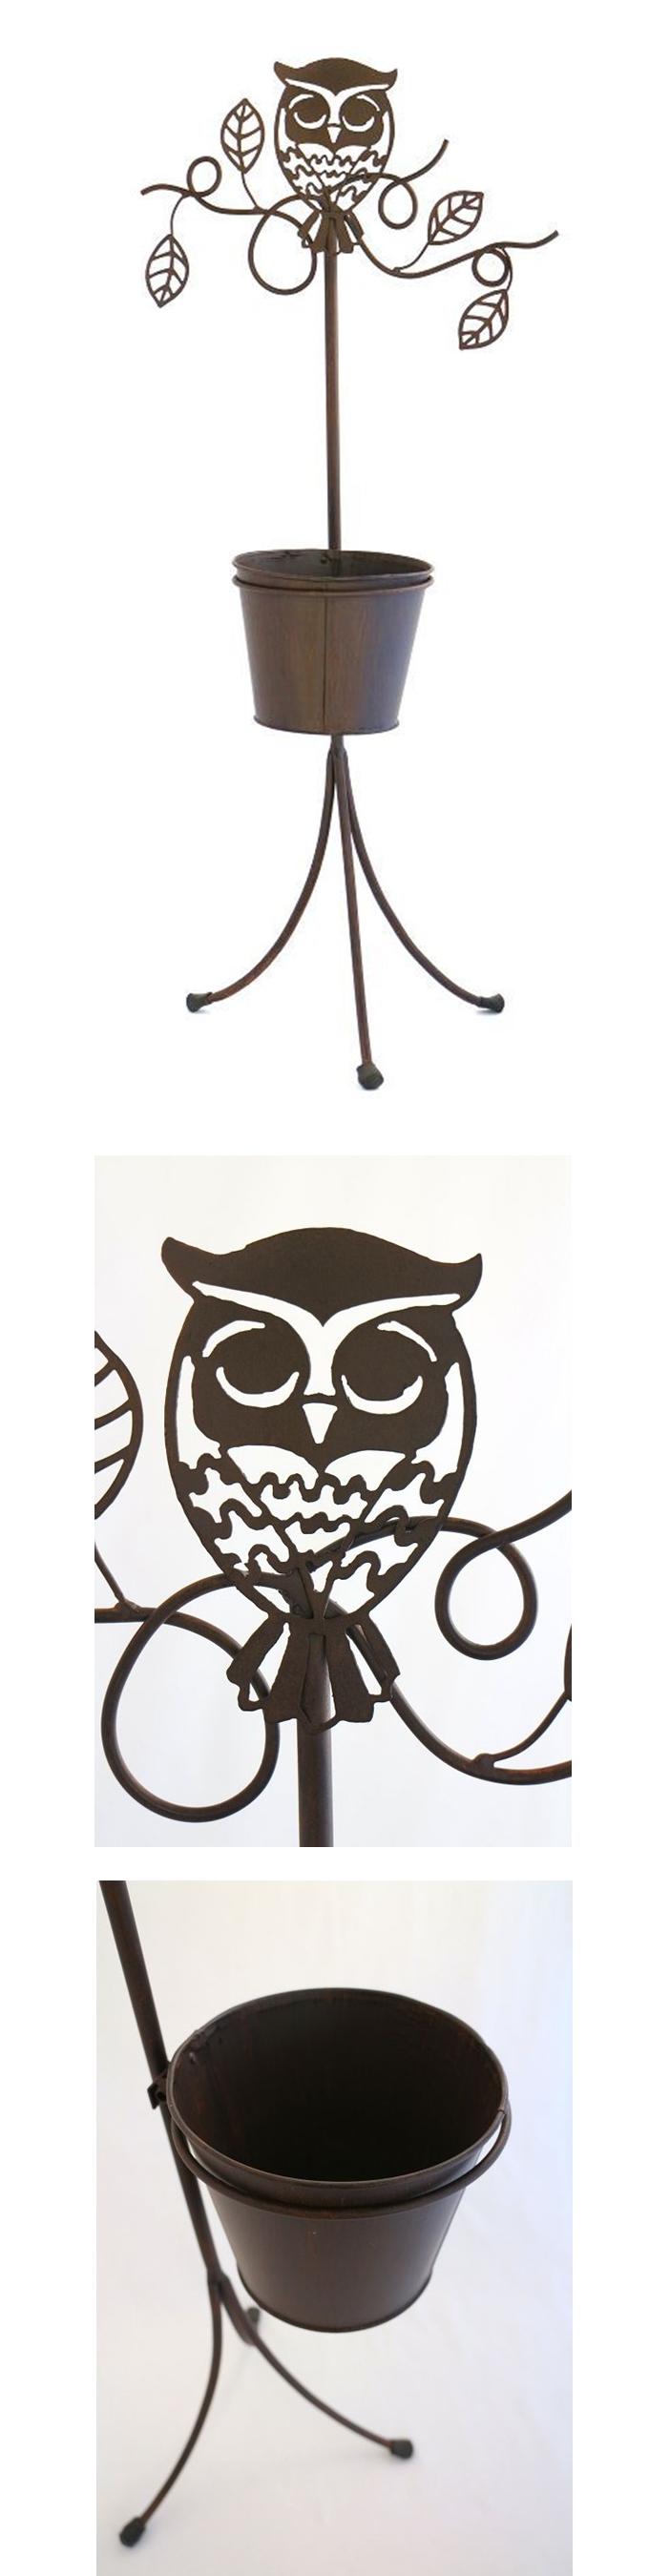 “OWL